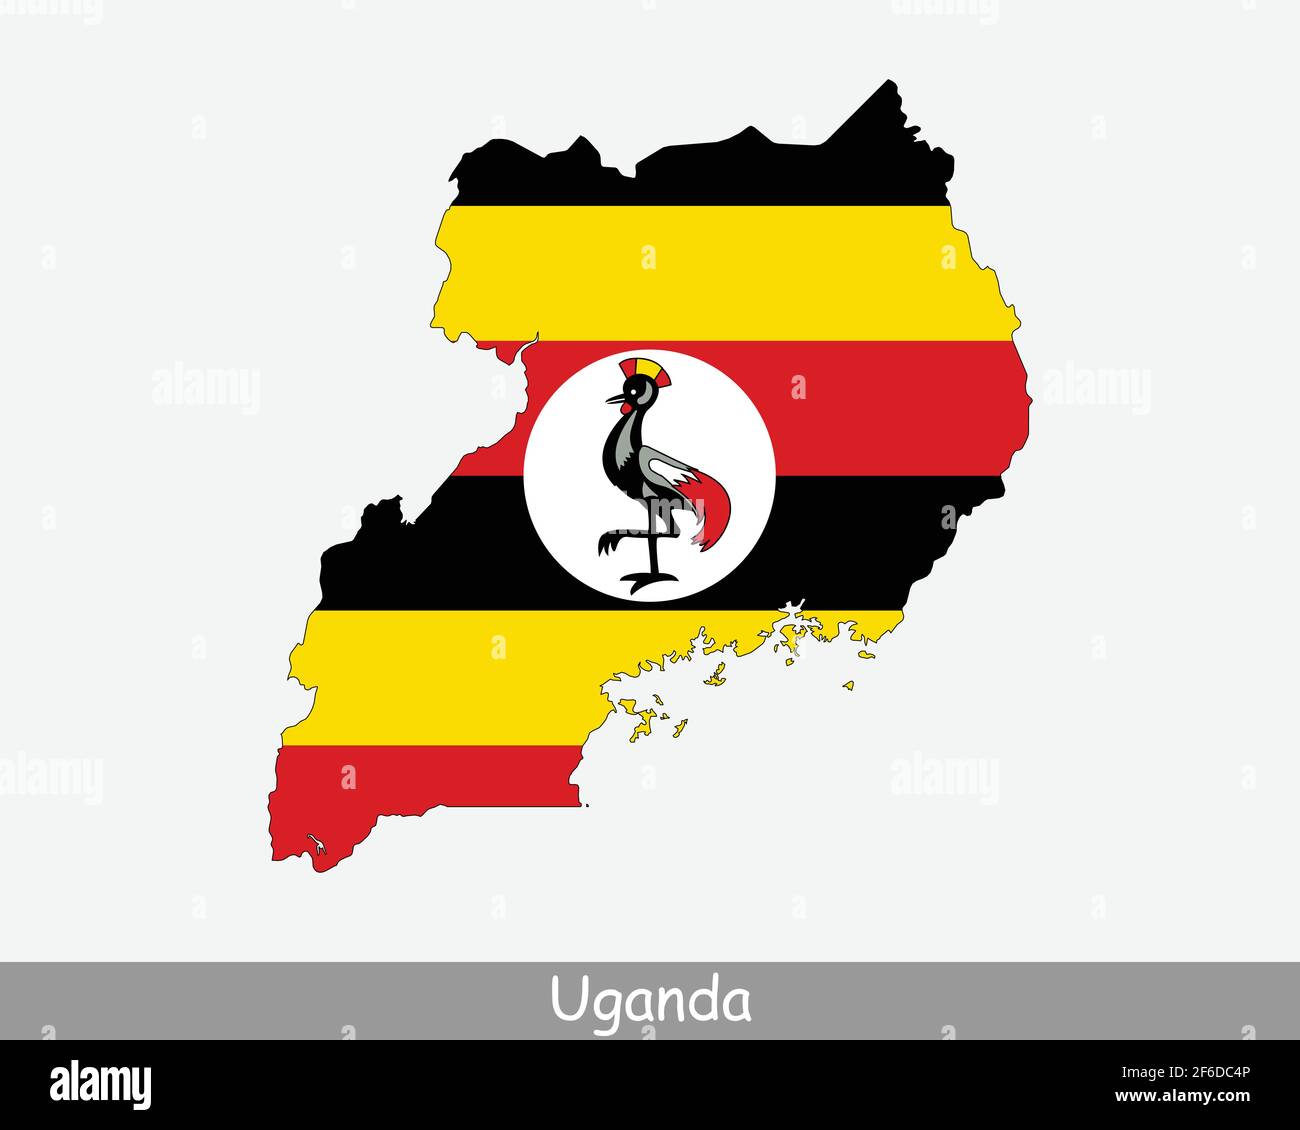 Uganda Flag Map. Map of the Republic of Uganda with the Ugandan national flag isolated on a white background. Vector Illustration. Stock Vector